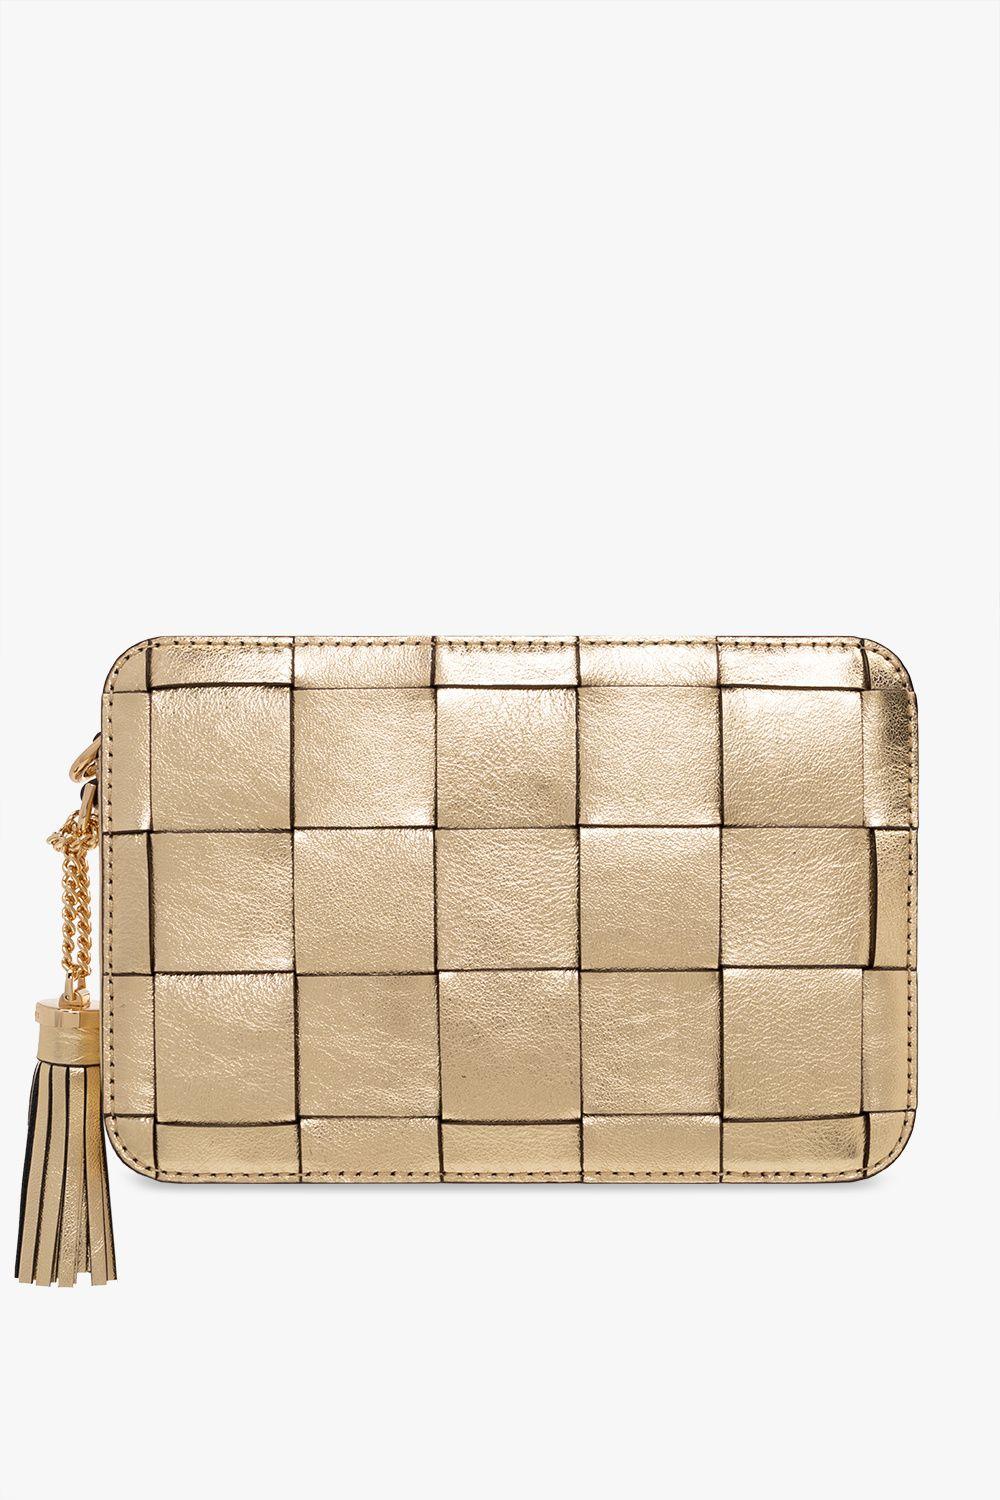 Michael Kors Metallic Gold Leather Medium Ginny Crossbody Bag Michael Kors